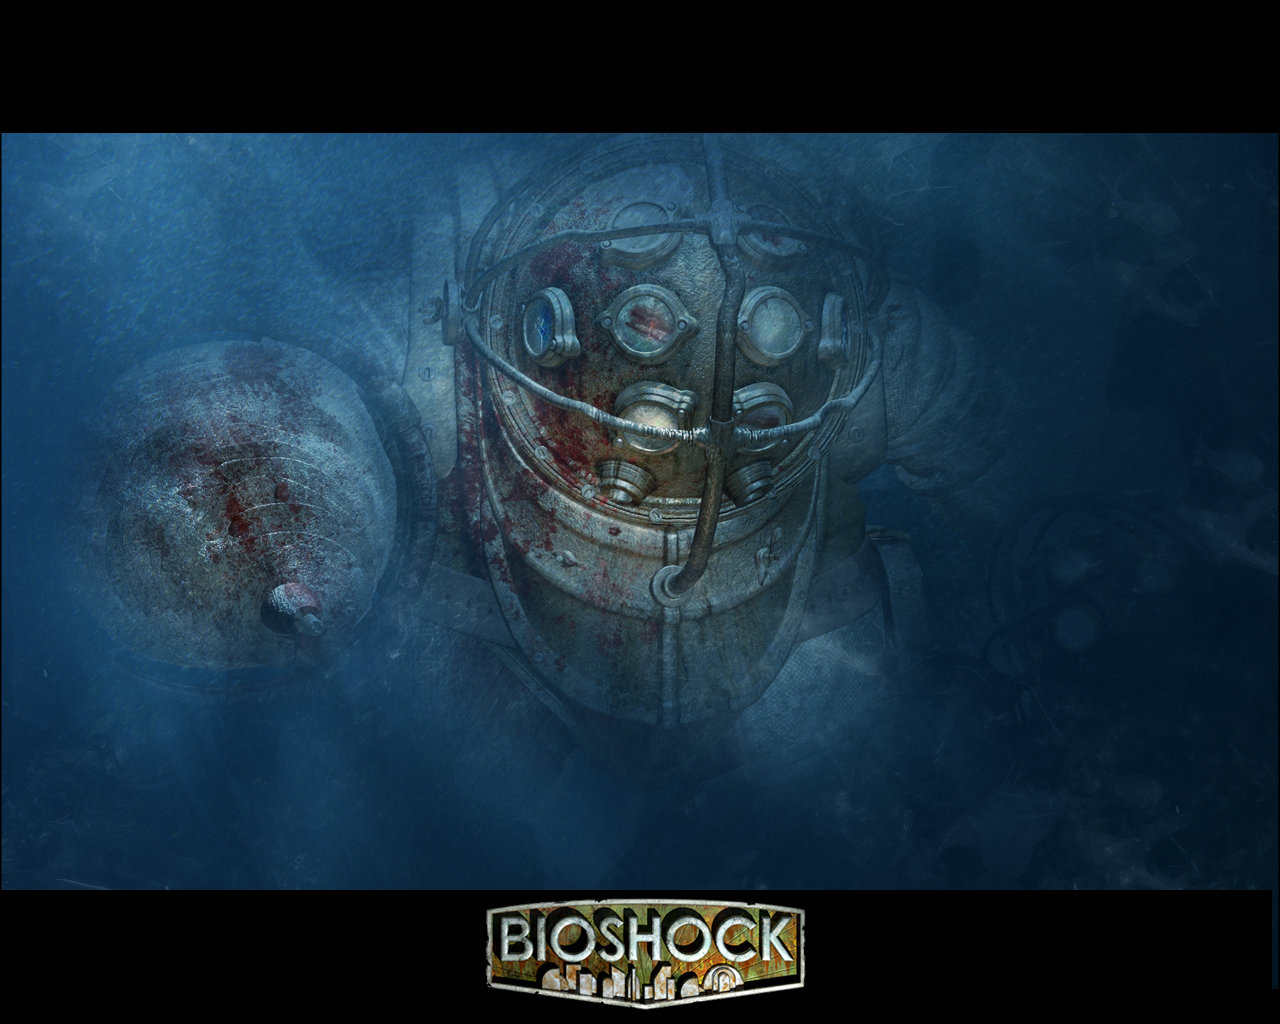 Bioshock wallpapers HD for desktop backgrounds